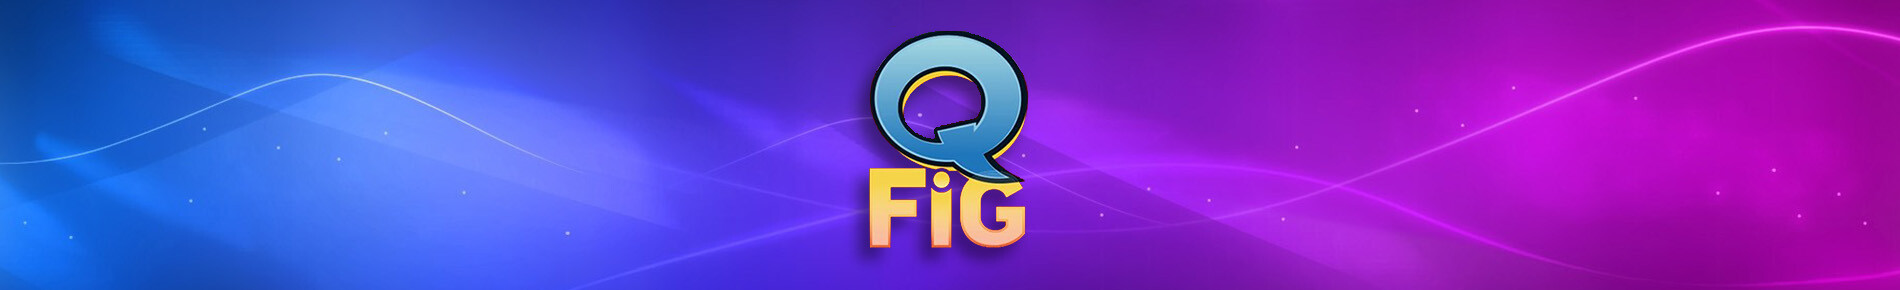 Q-figs